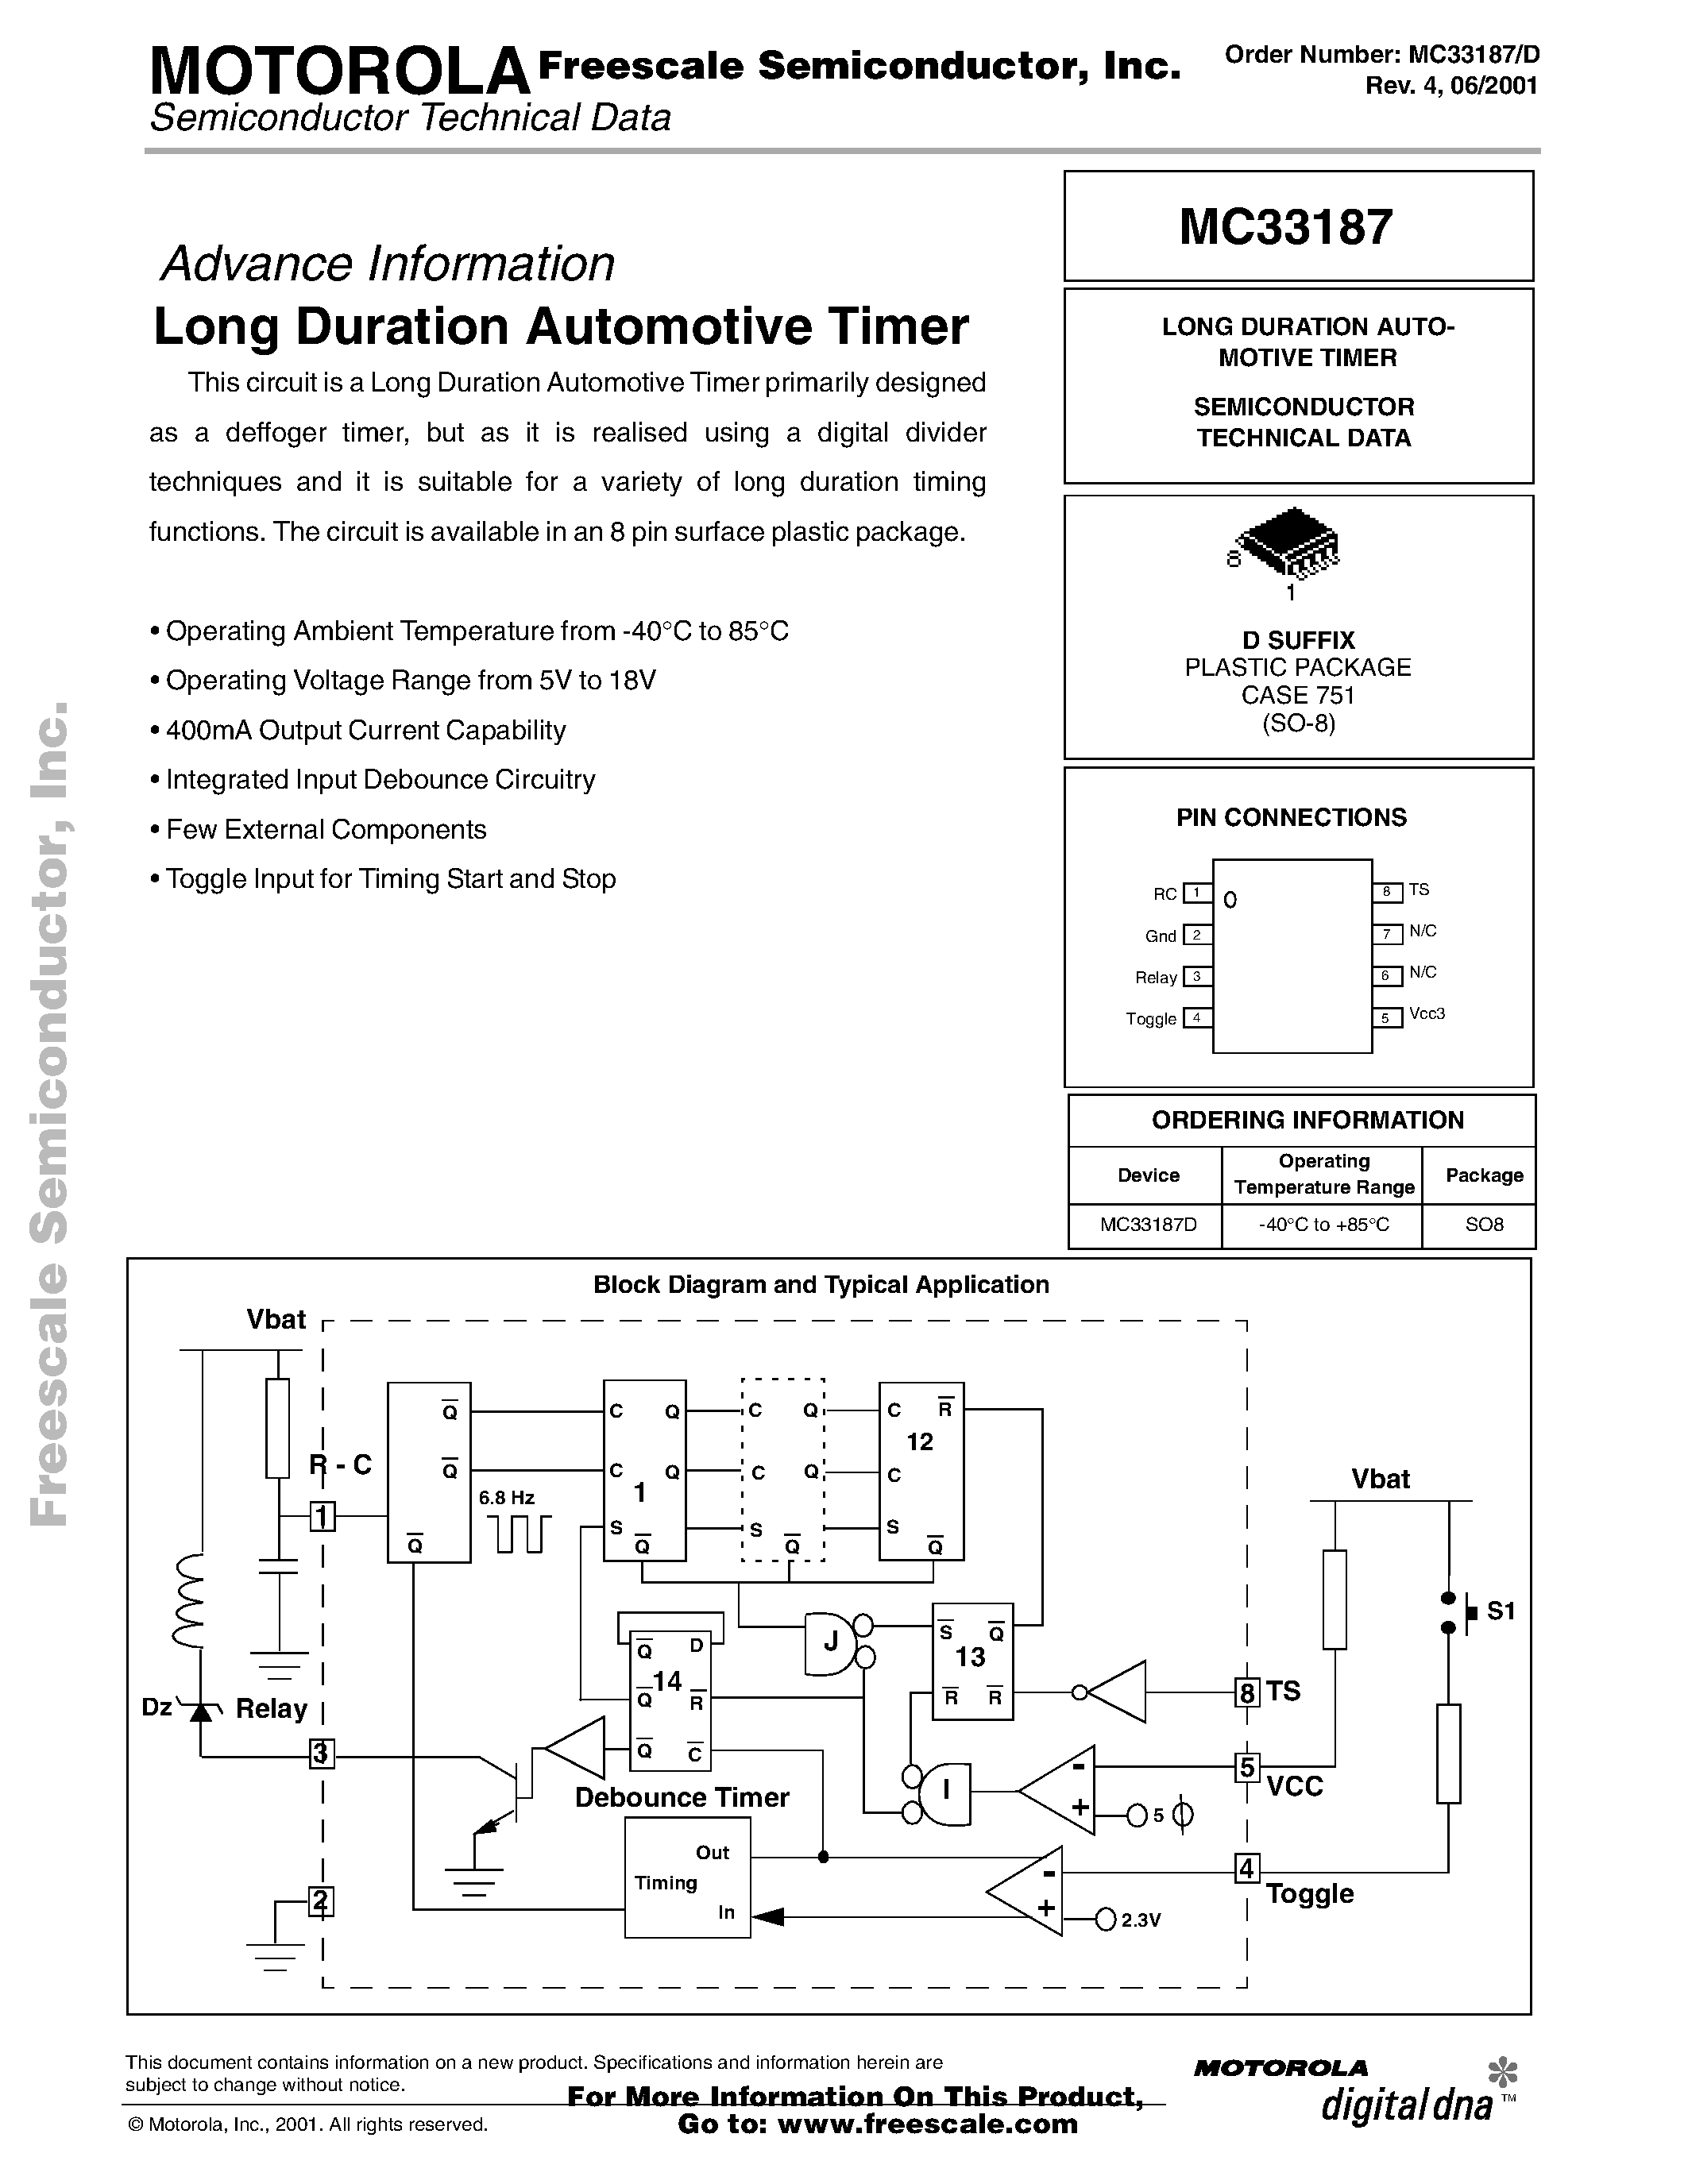 Datasheet MC33187 - Long Duration Automotive Timer page 1